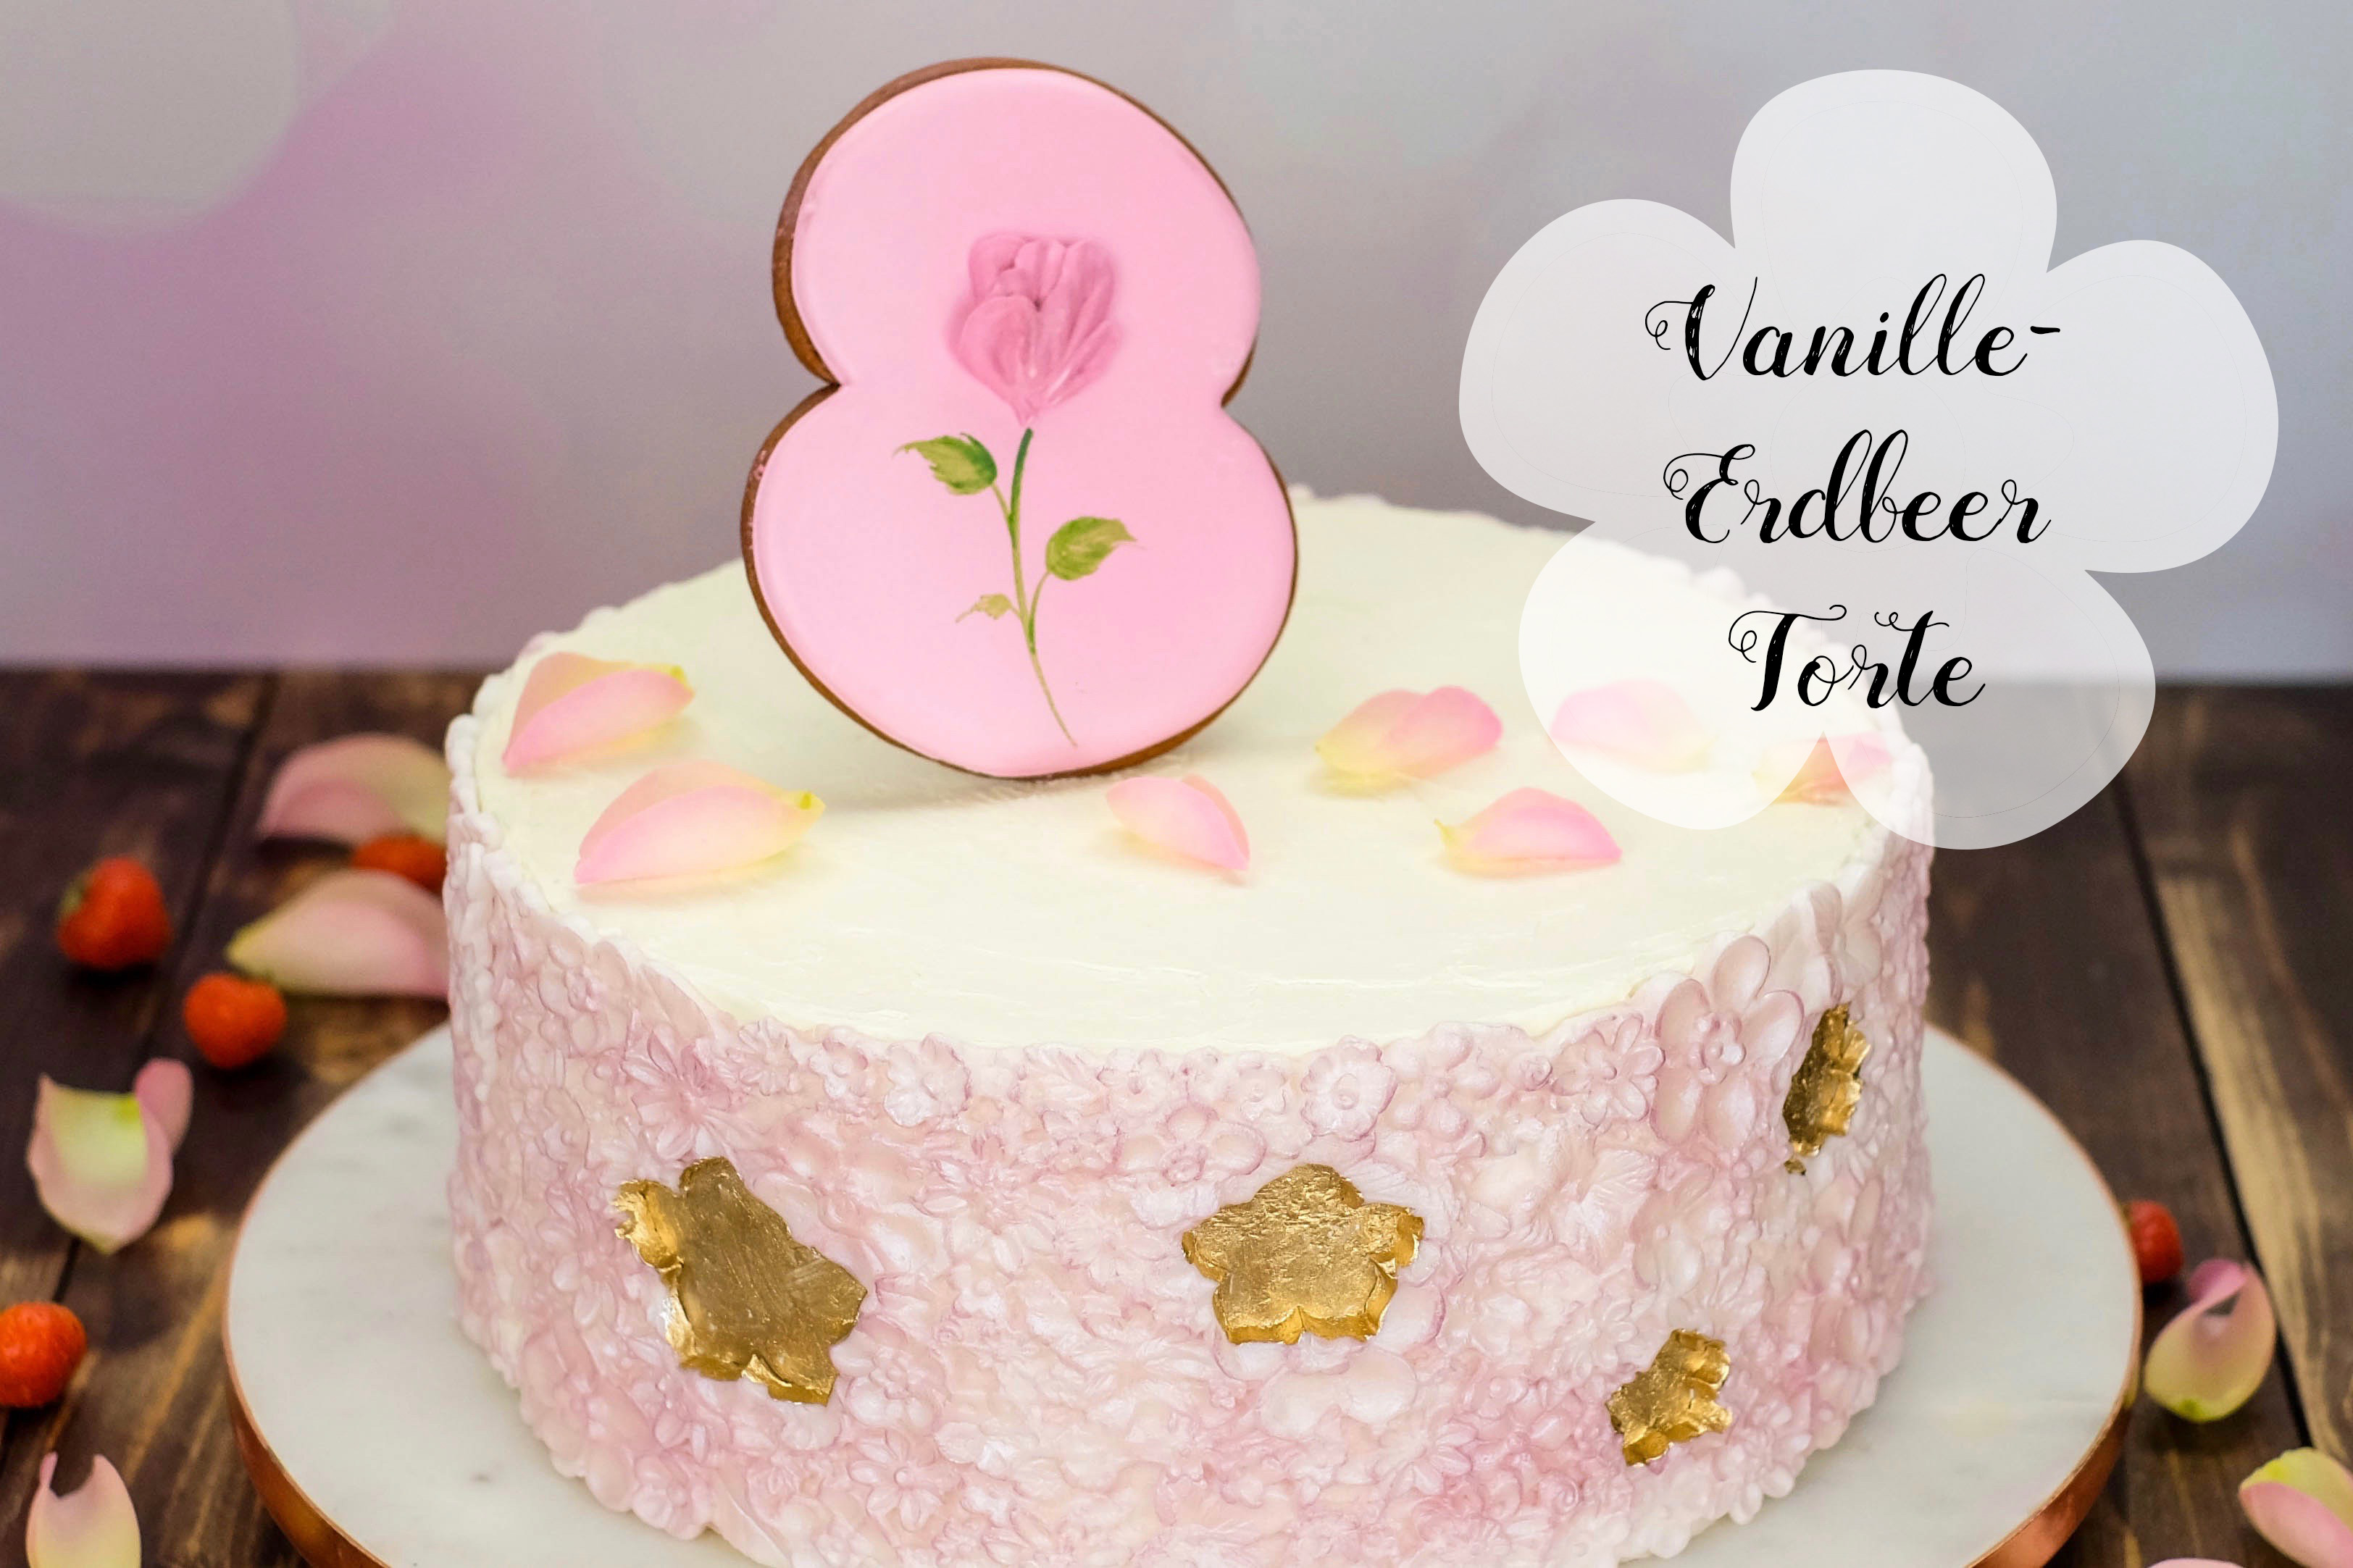 Vanille-Erdbeer Torte  Marion's Kaffeeklatsch